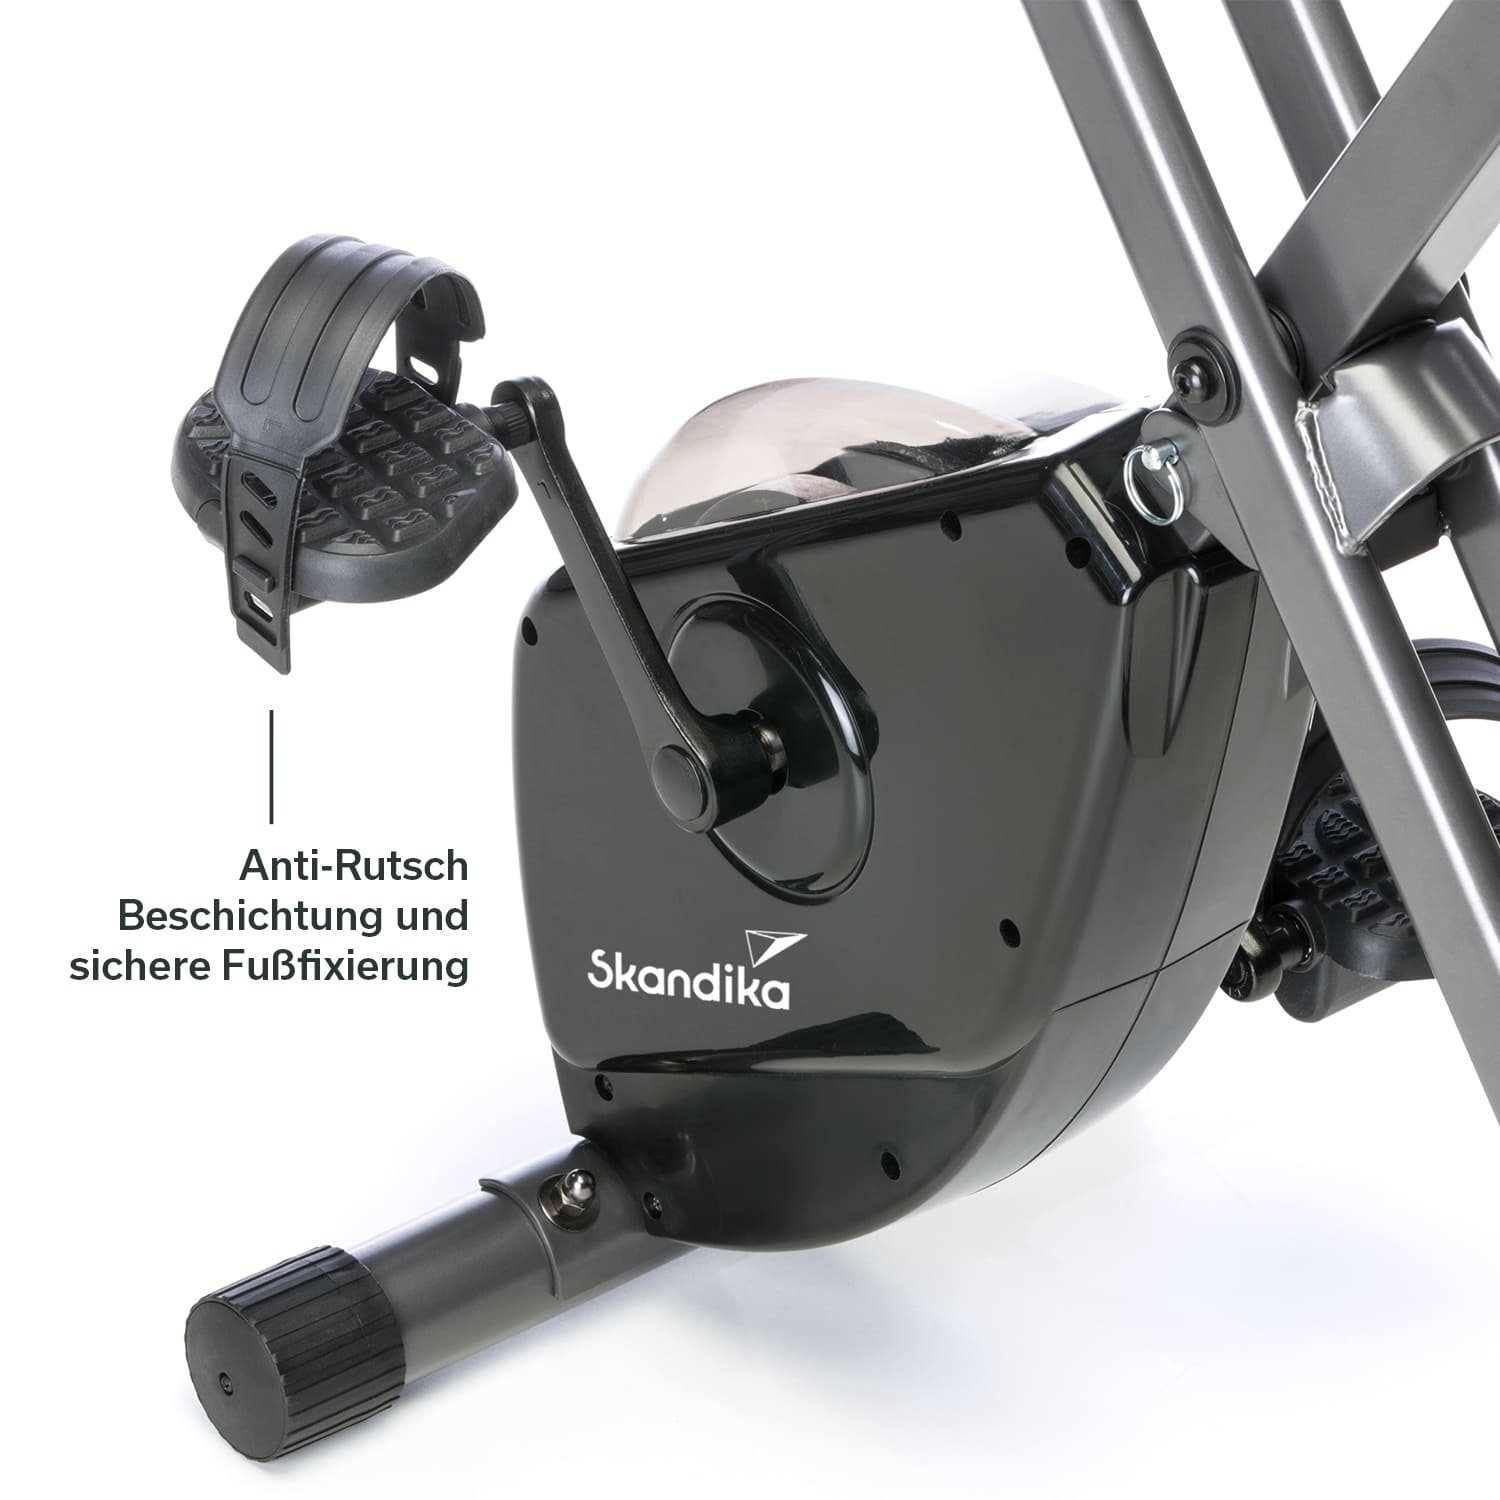 Heimtrainer Handpuls-Sensoren, mit Skandika Hometrainer, Foldaway X-1000 LCD klappbar Magnetwiderstand, X-Bike,